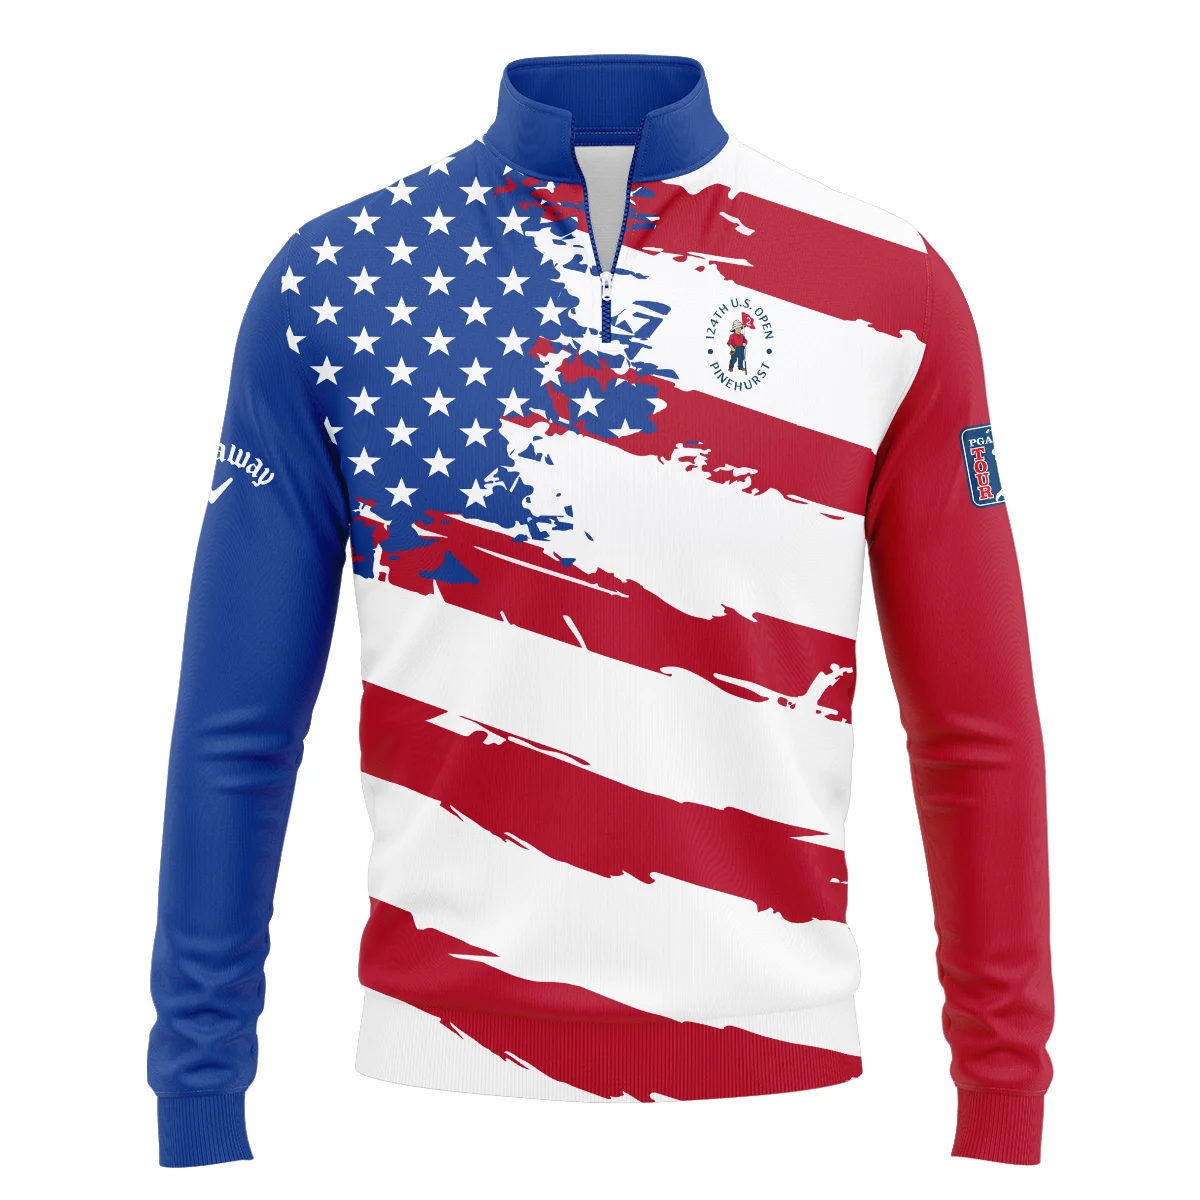 Callaway US Flag Blue Red Stars 124th U.S. Open Pinehurst Polo Shirt Mandarin Collar Polo Shirt